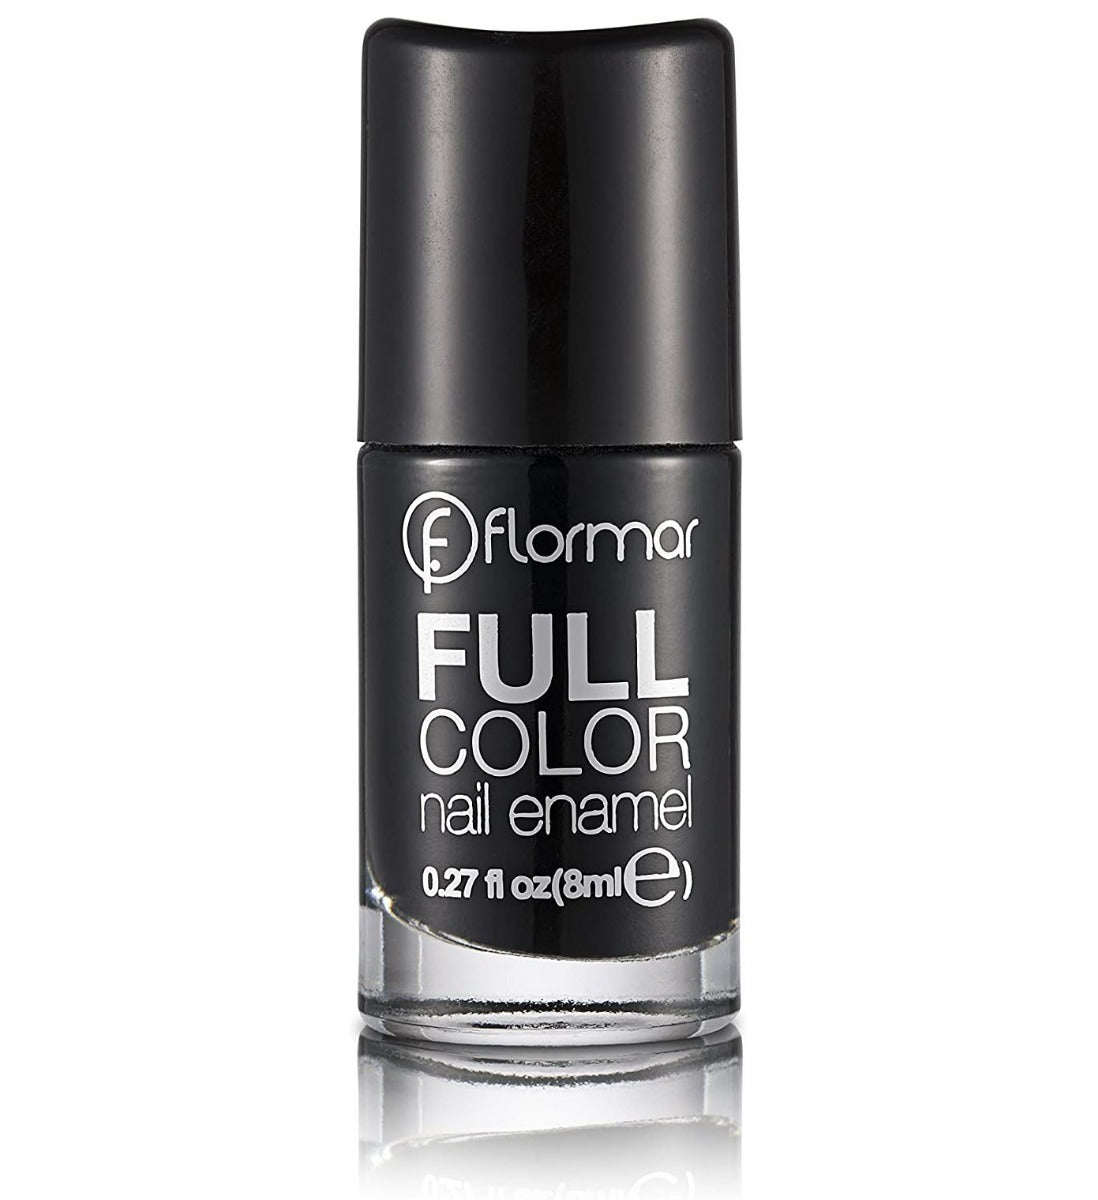 Flormar Full Color Nail Enamel (8ml)